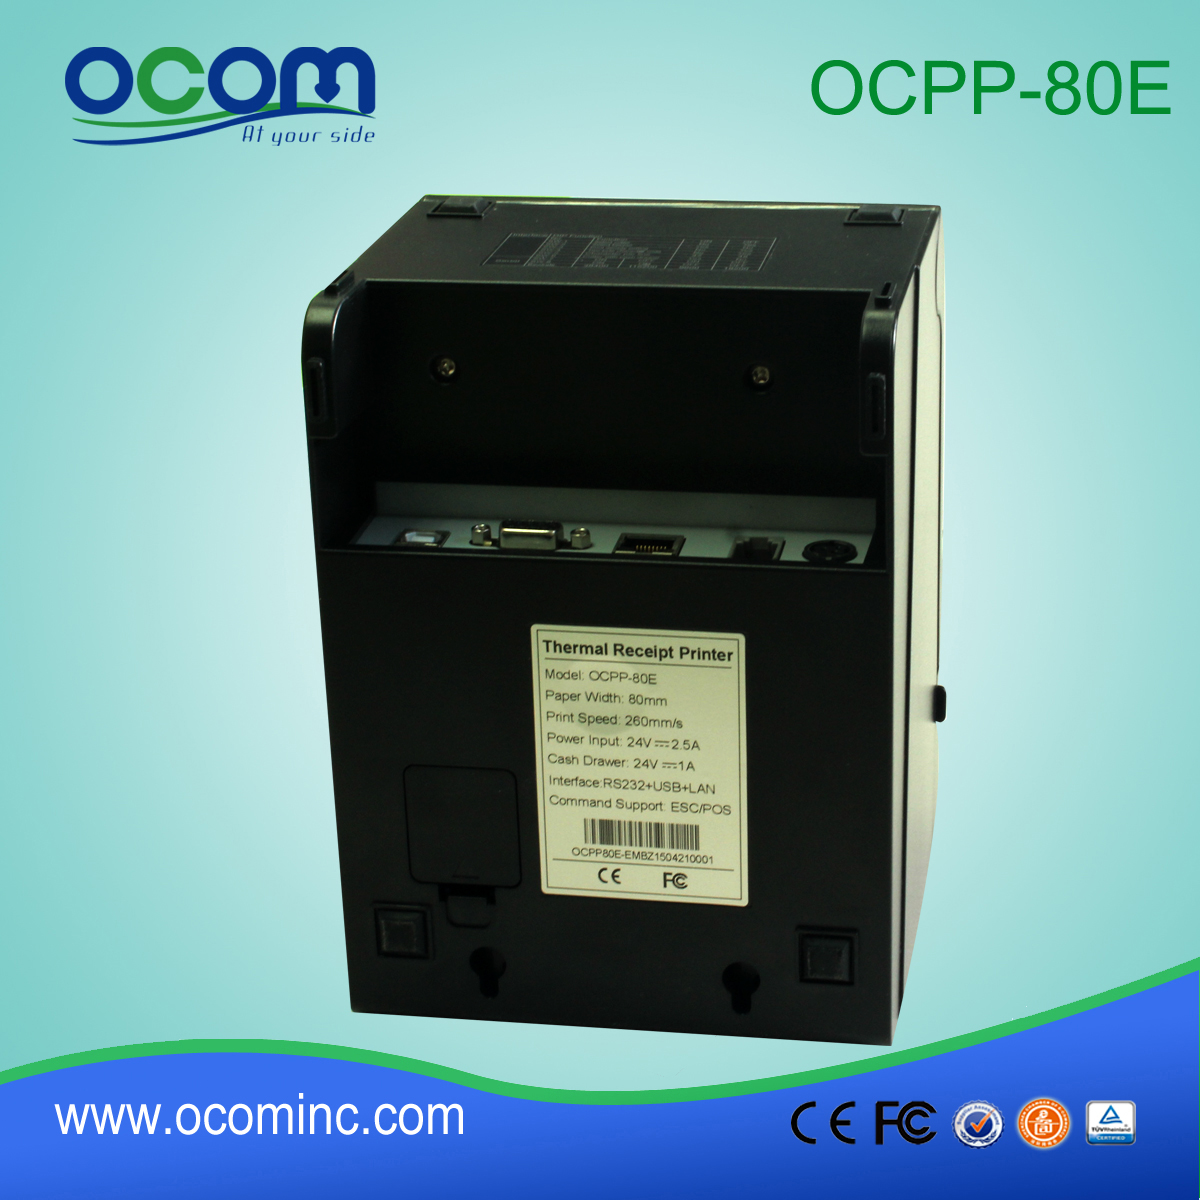 OCPP-80E --- Κίνα έκανε χαμηλή τιμή POS εκτυπωτή αποδείξεων